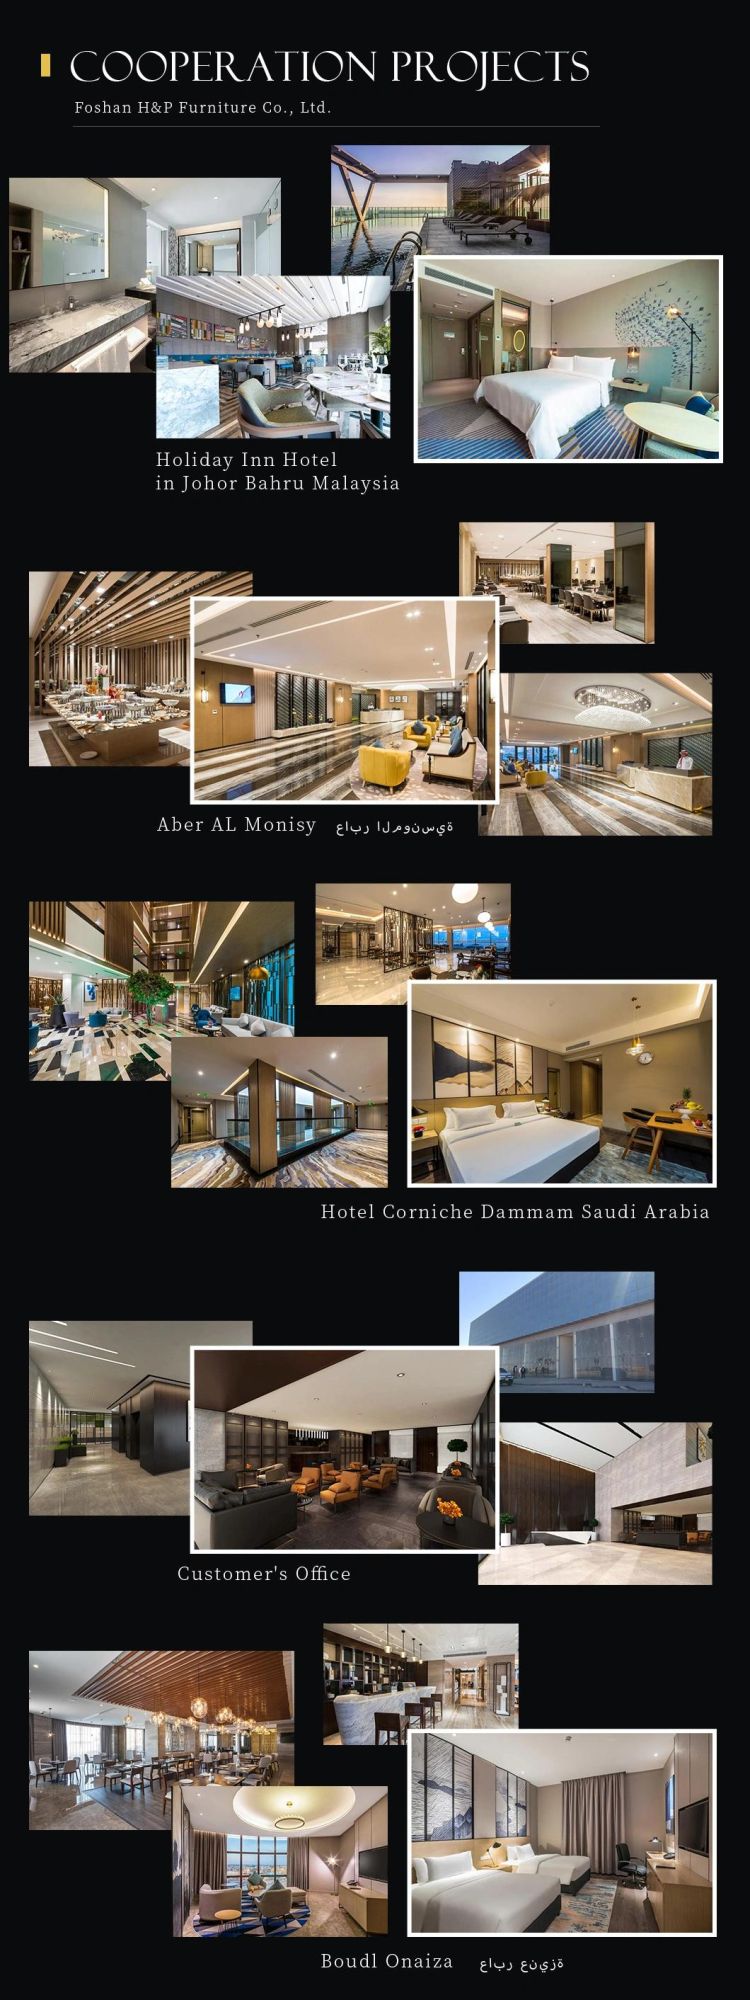 Customizable Luxury Modern Wooden Hotel Living Room Furniture Set